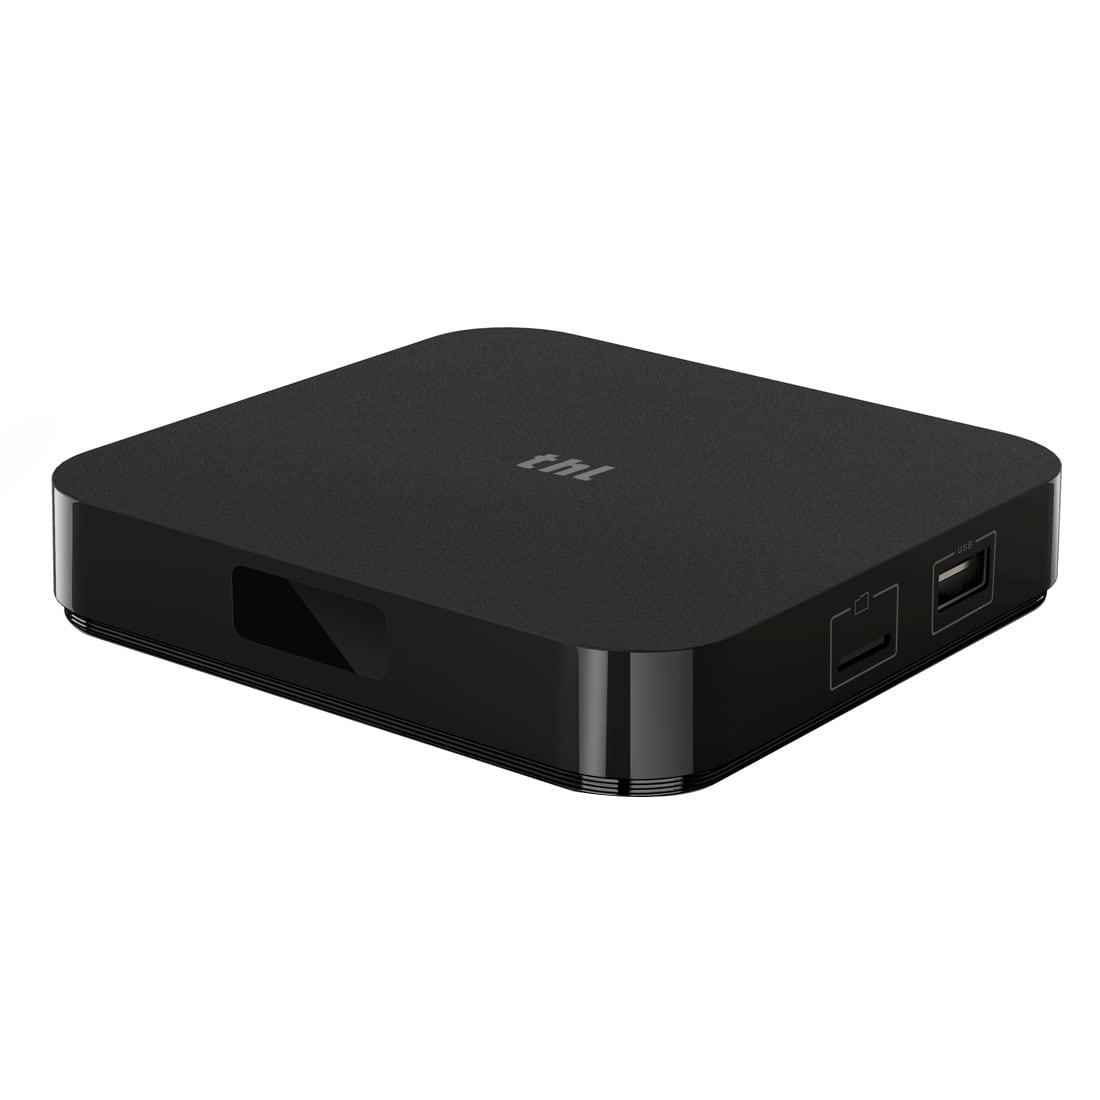 TV-BOX 1 Ultra HD 4K Smart TV Android 7.1 - Wi-Fi, HDMI